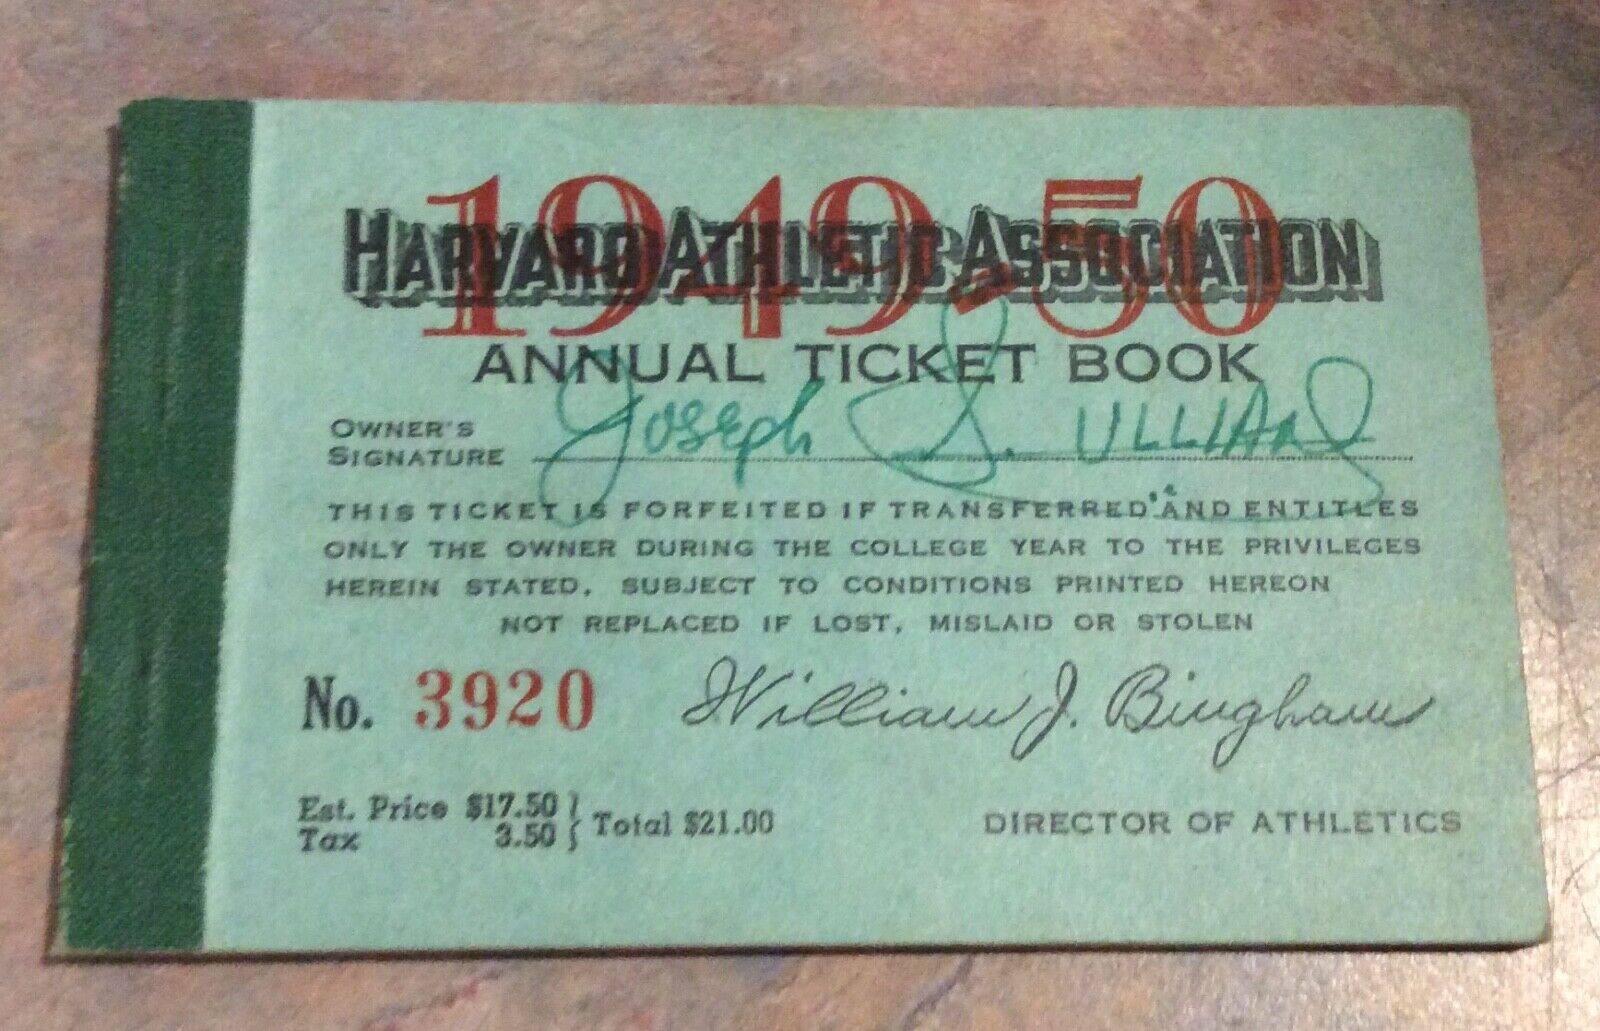 Harvard Athletics Assn. 1949 Unused Ticket Book - Student Football Ticket Book